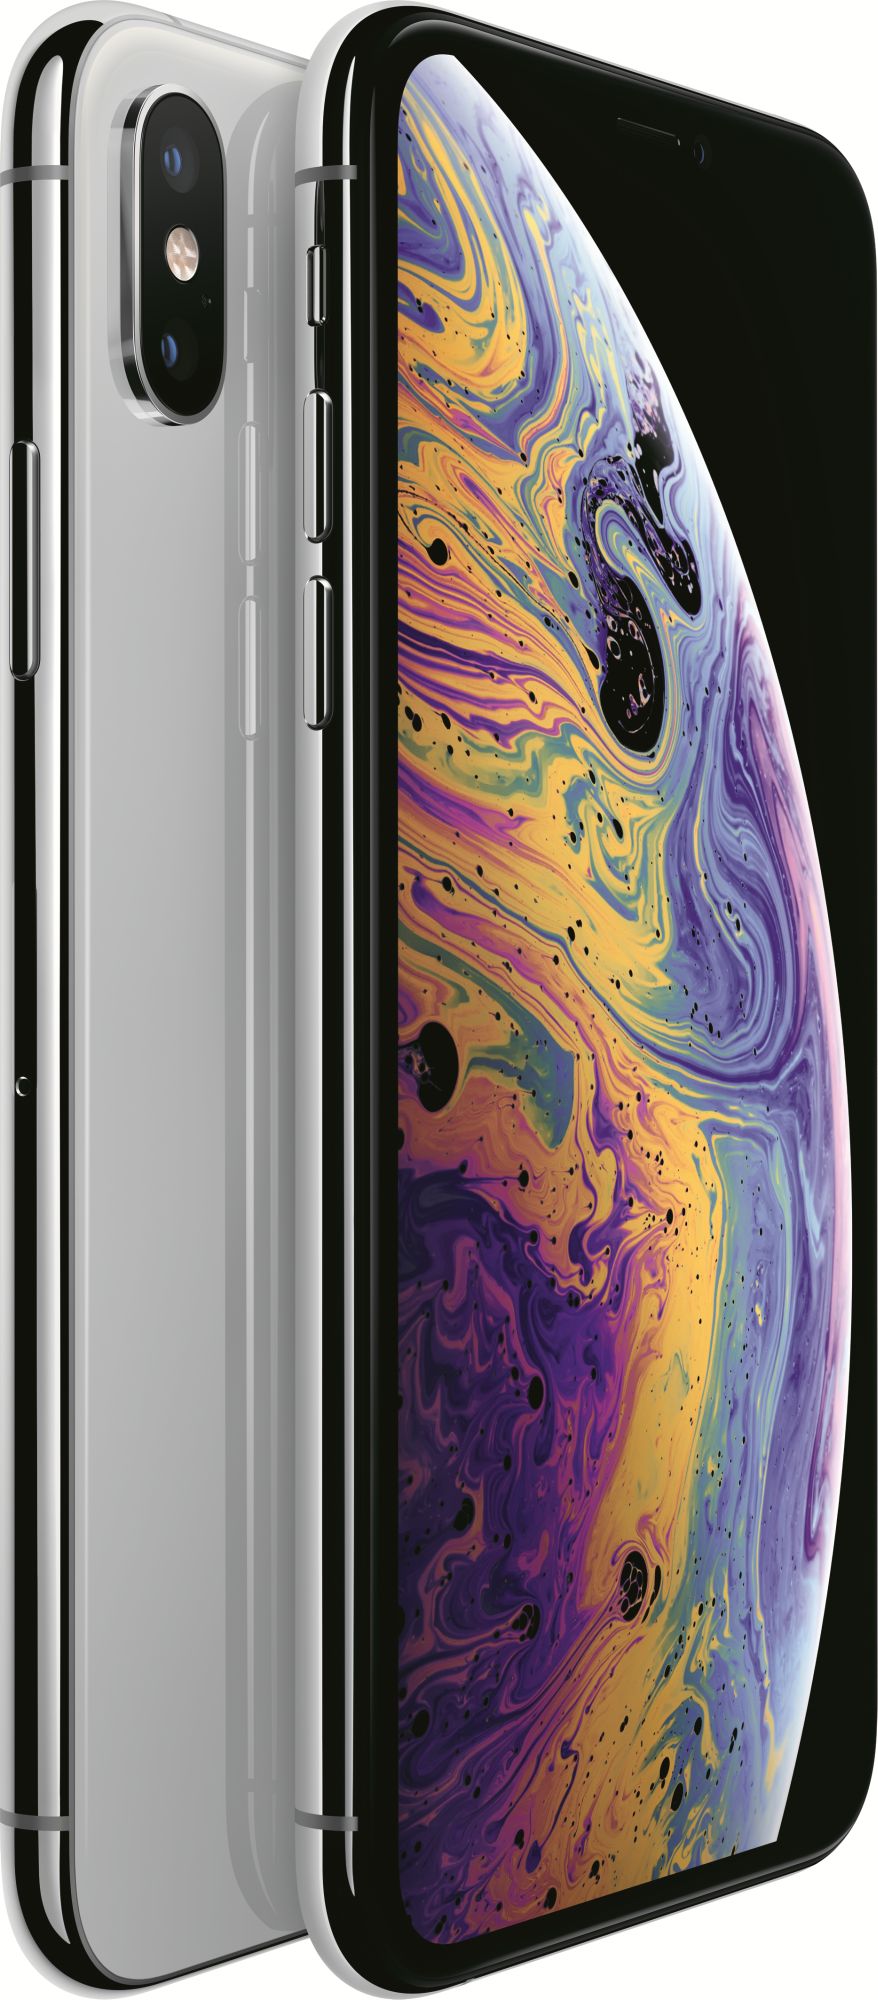 Apple iPhone XS 64GB